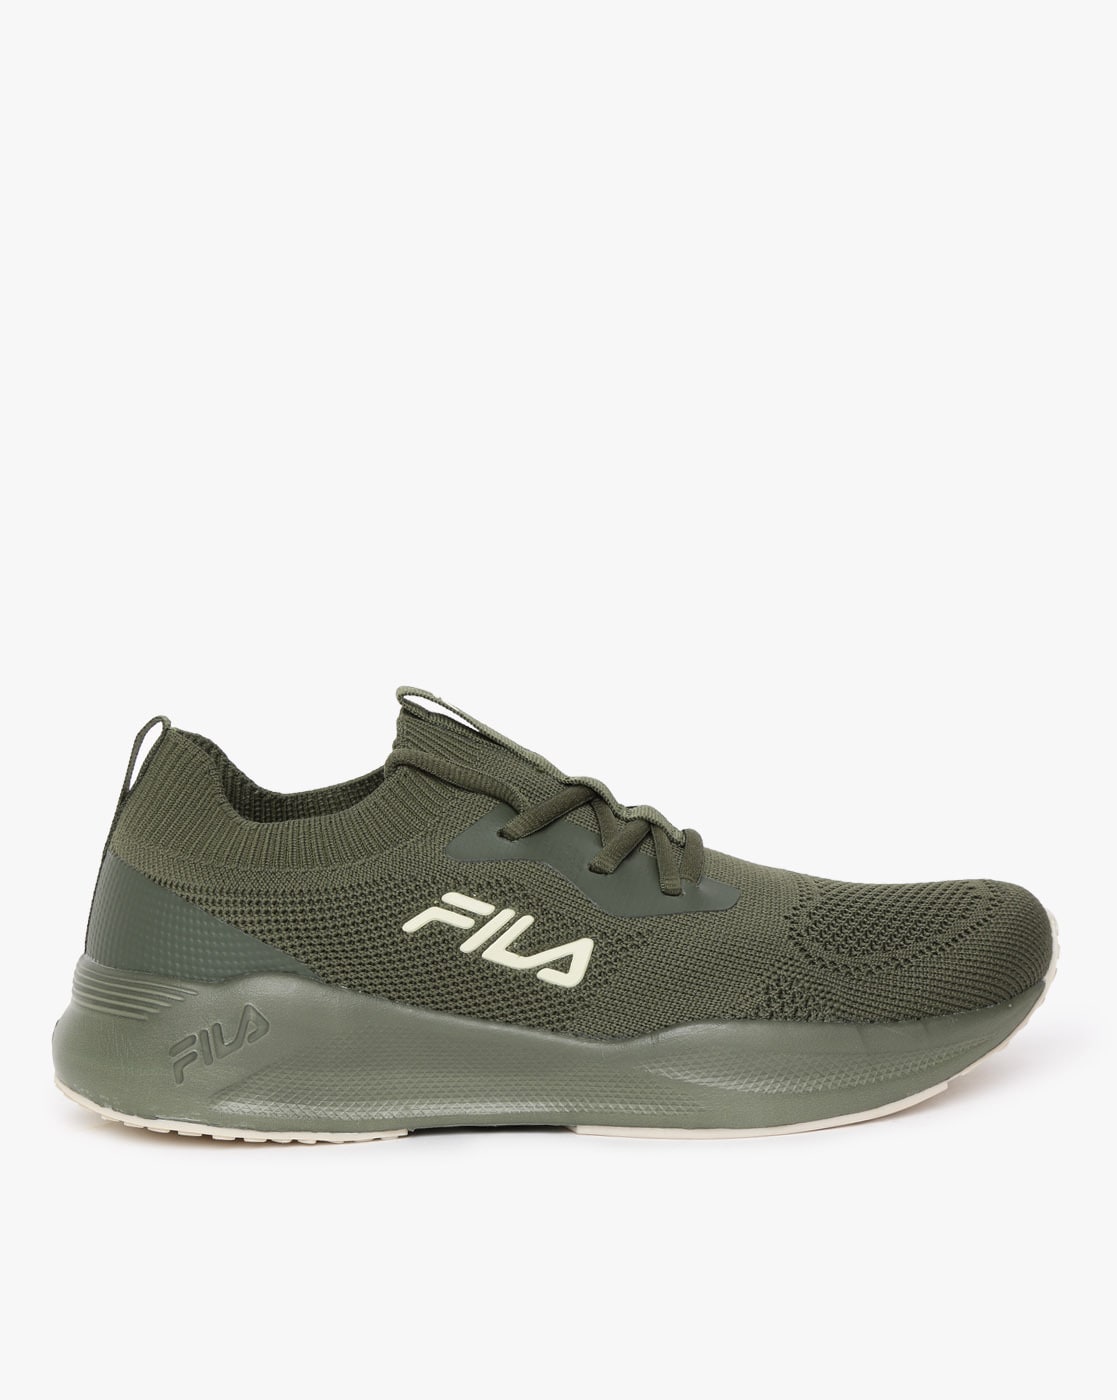 fila olive green shoes